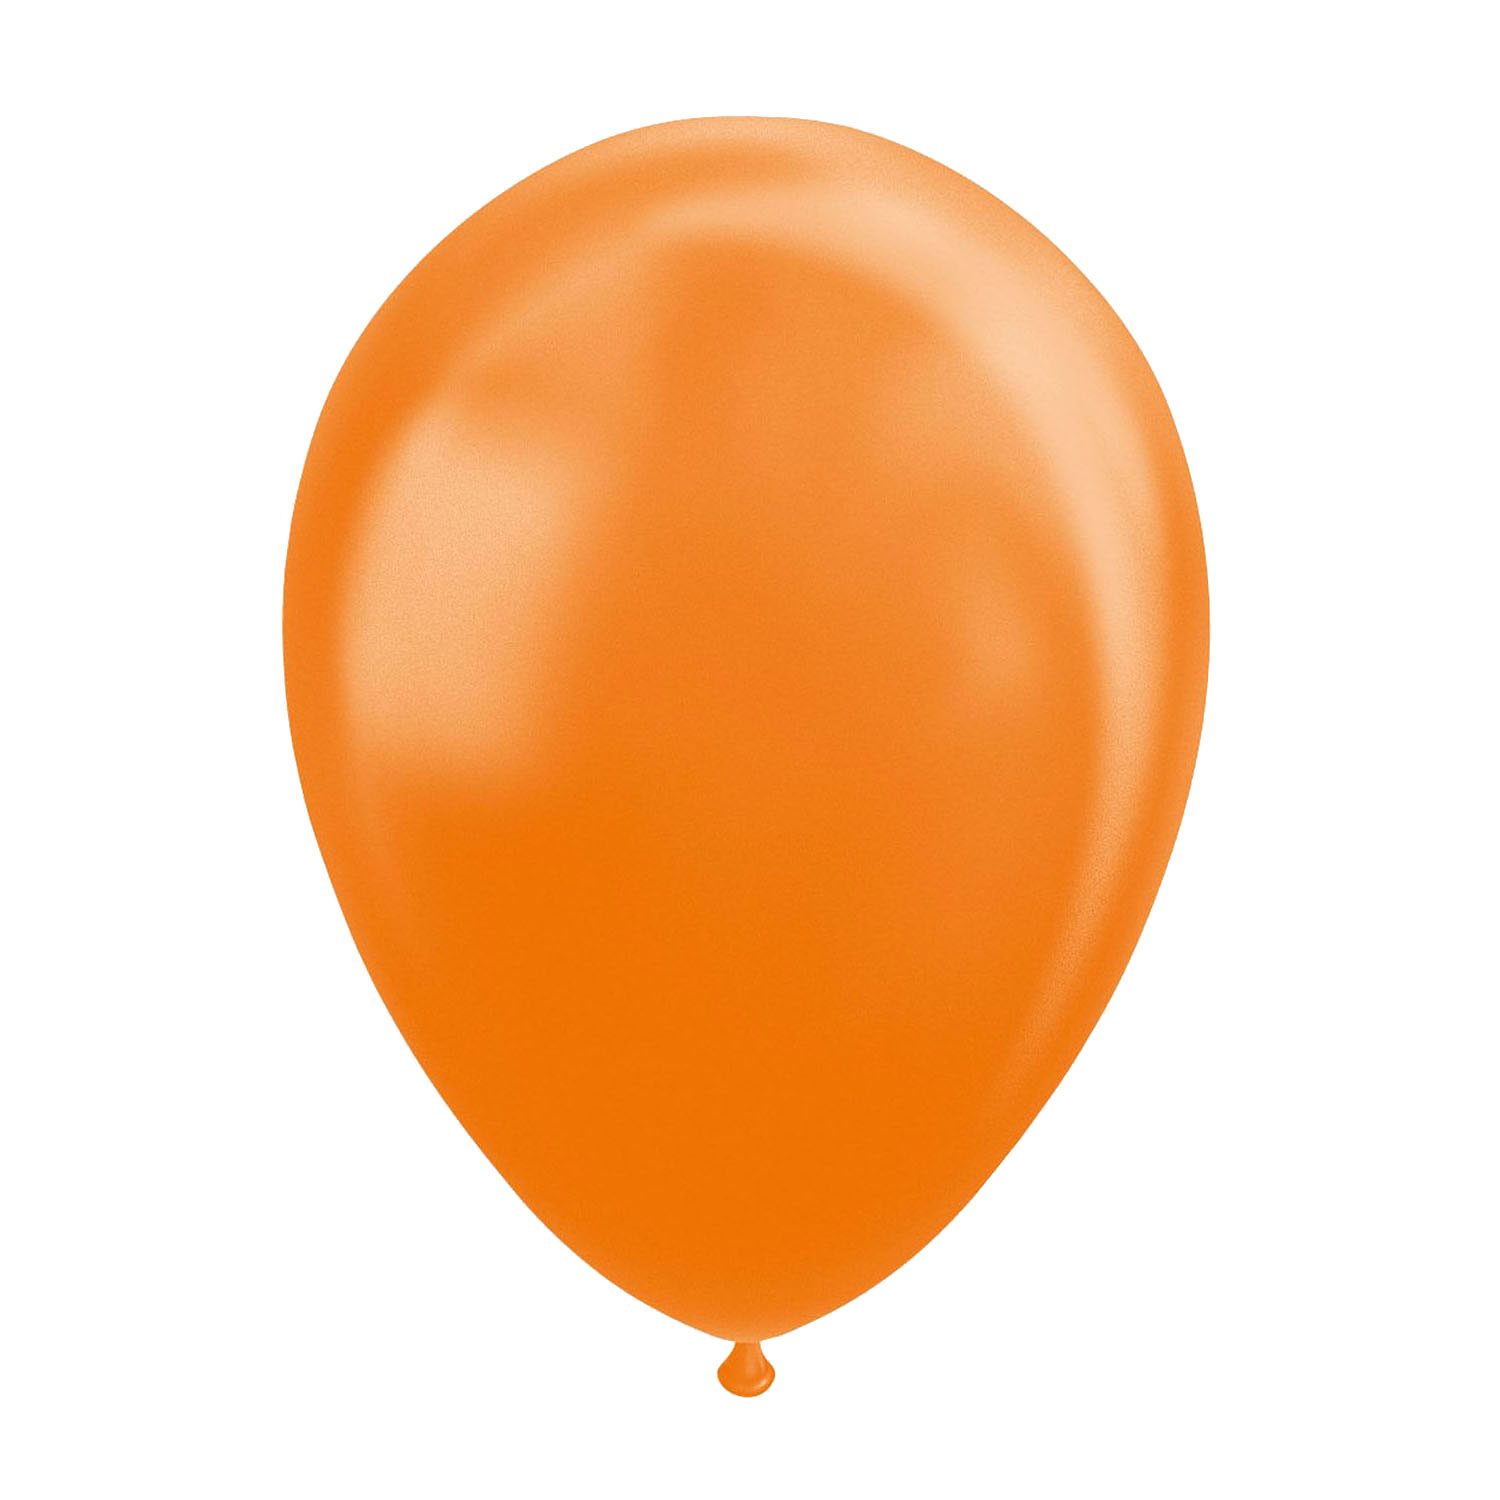 Luftballons Metallic Orange 30cm, 10Stk.